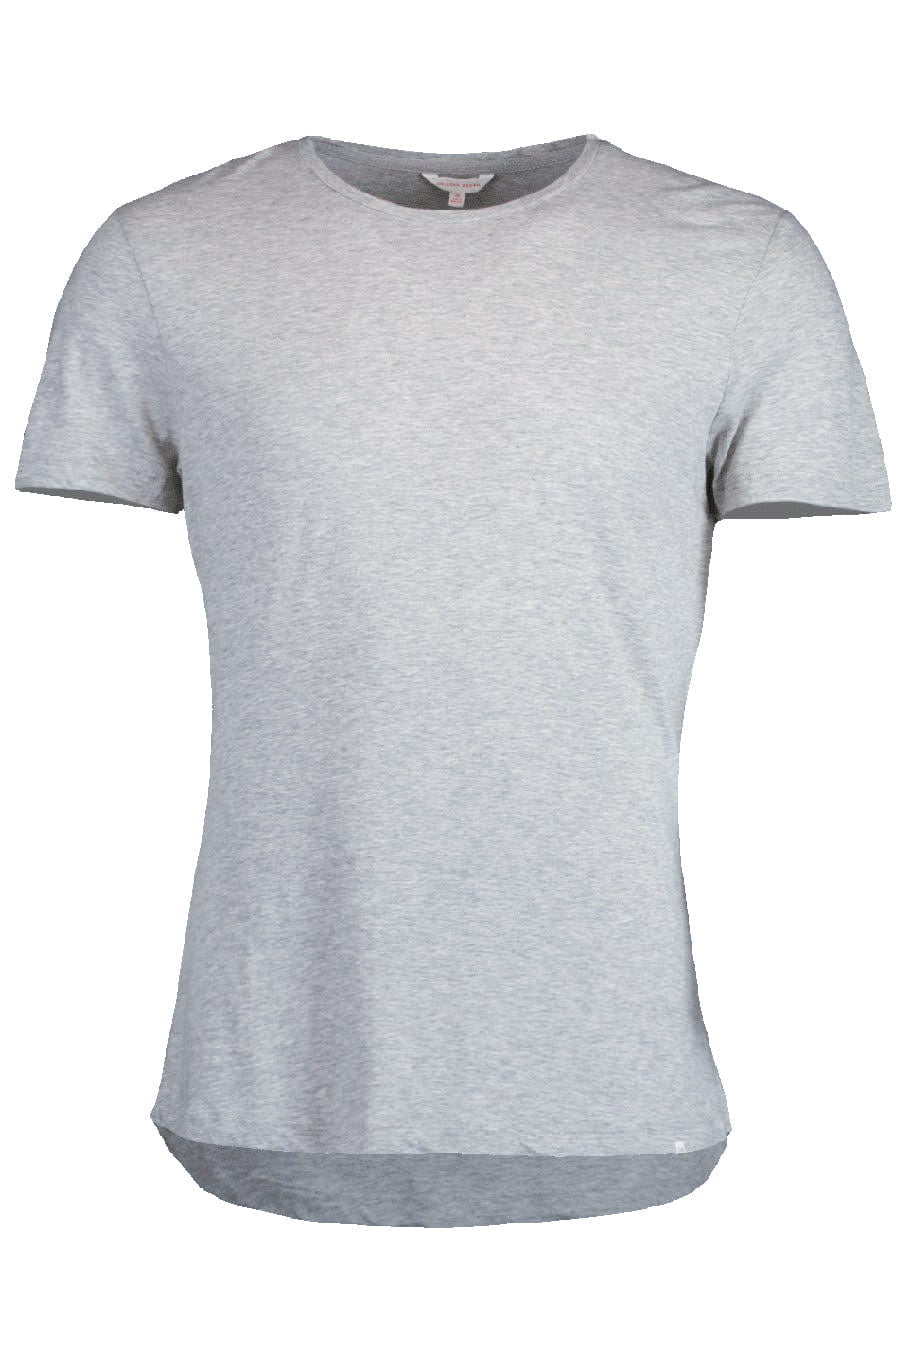 ORLEBAR BROWN-OB-T Grey T-Shirt-